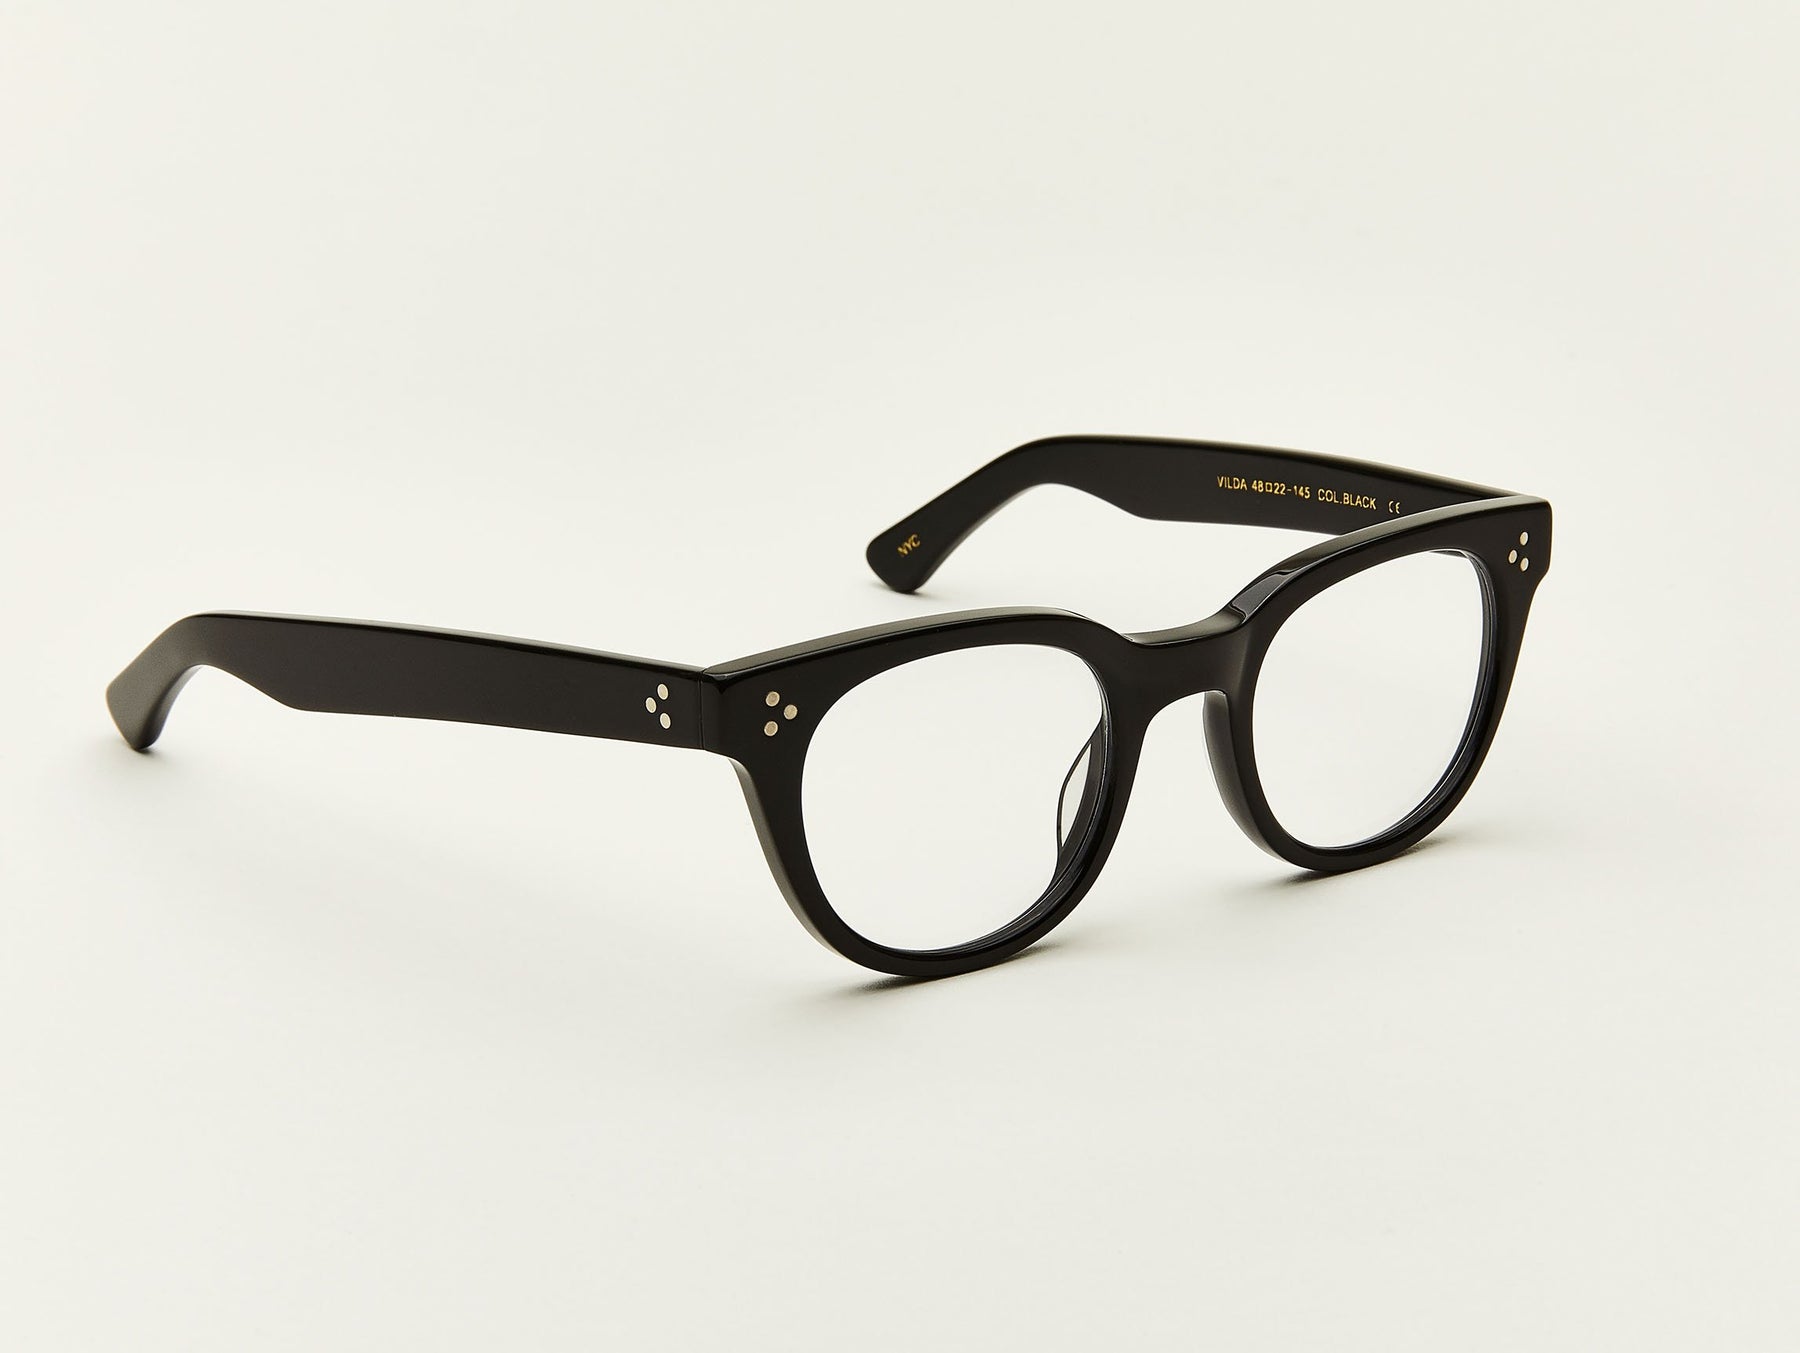 Stanley Black Frame Spectacles